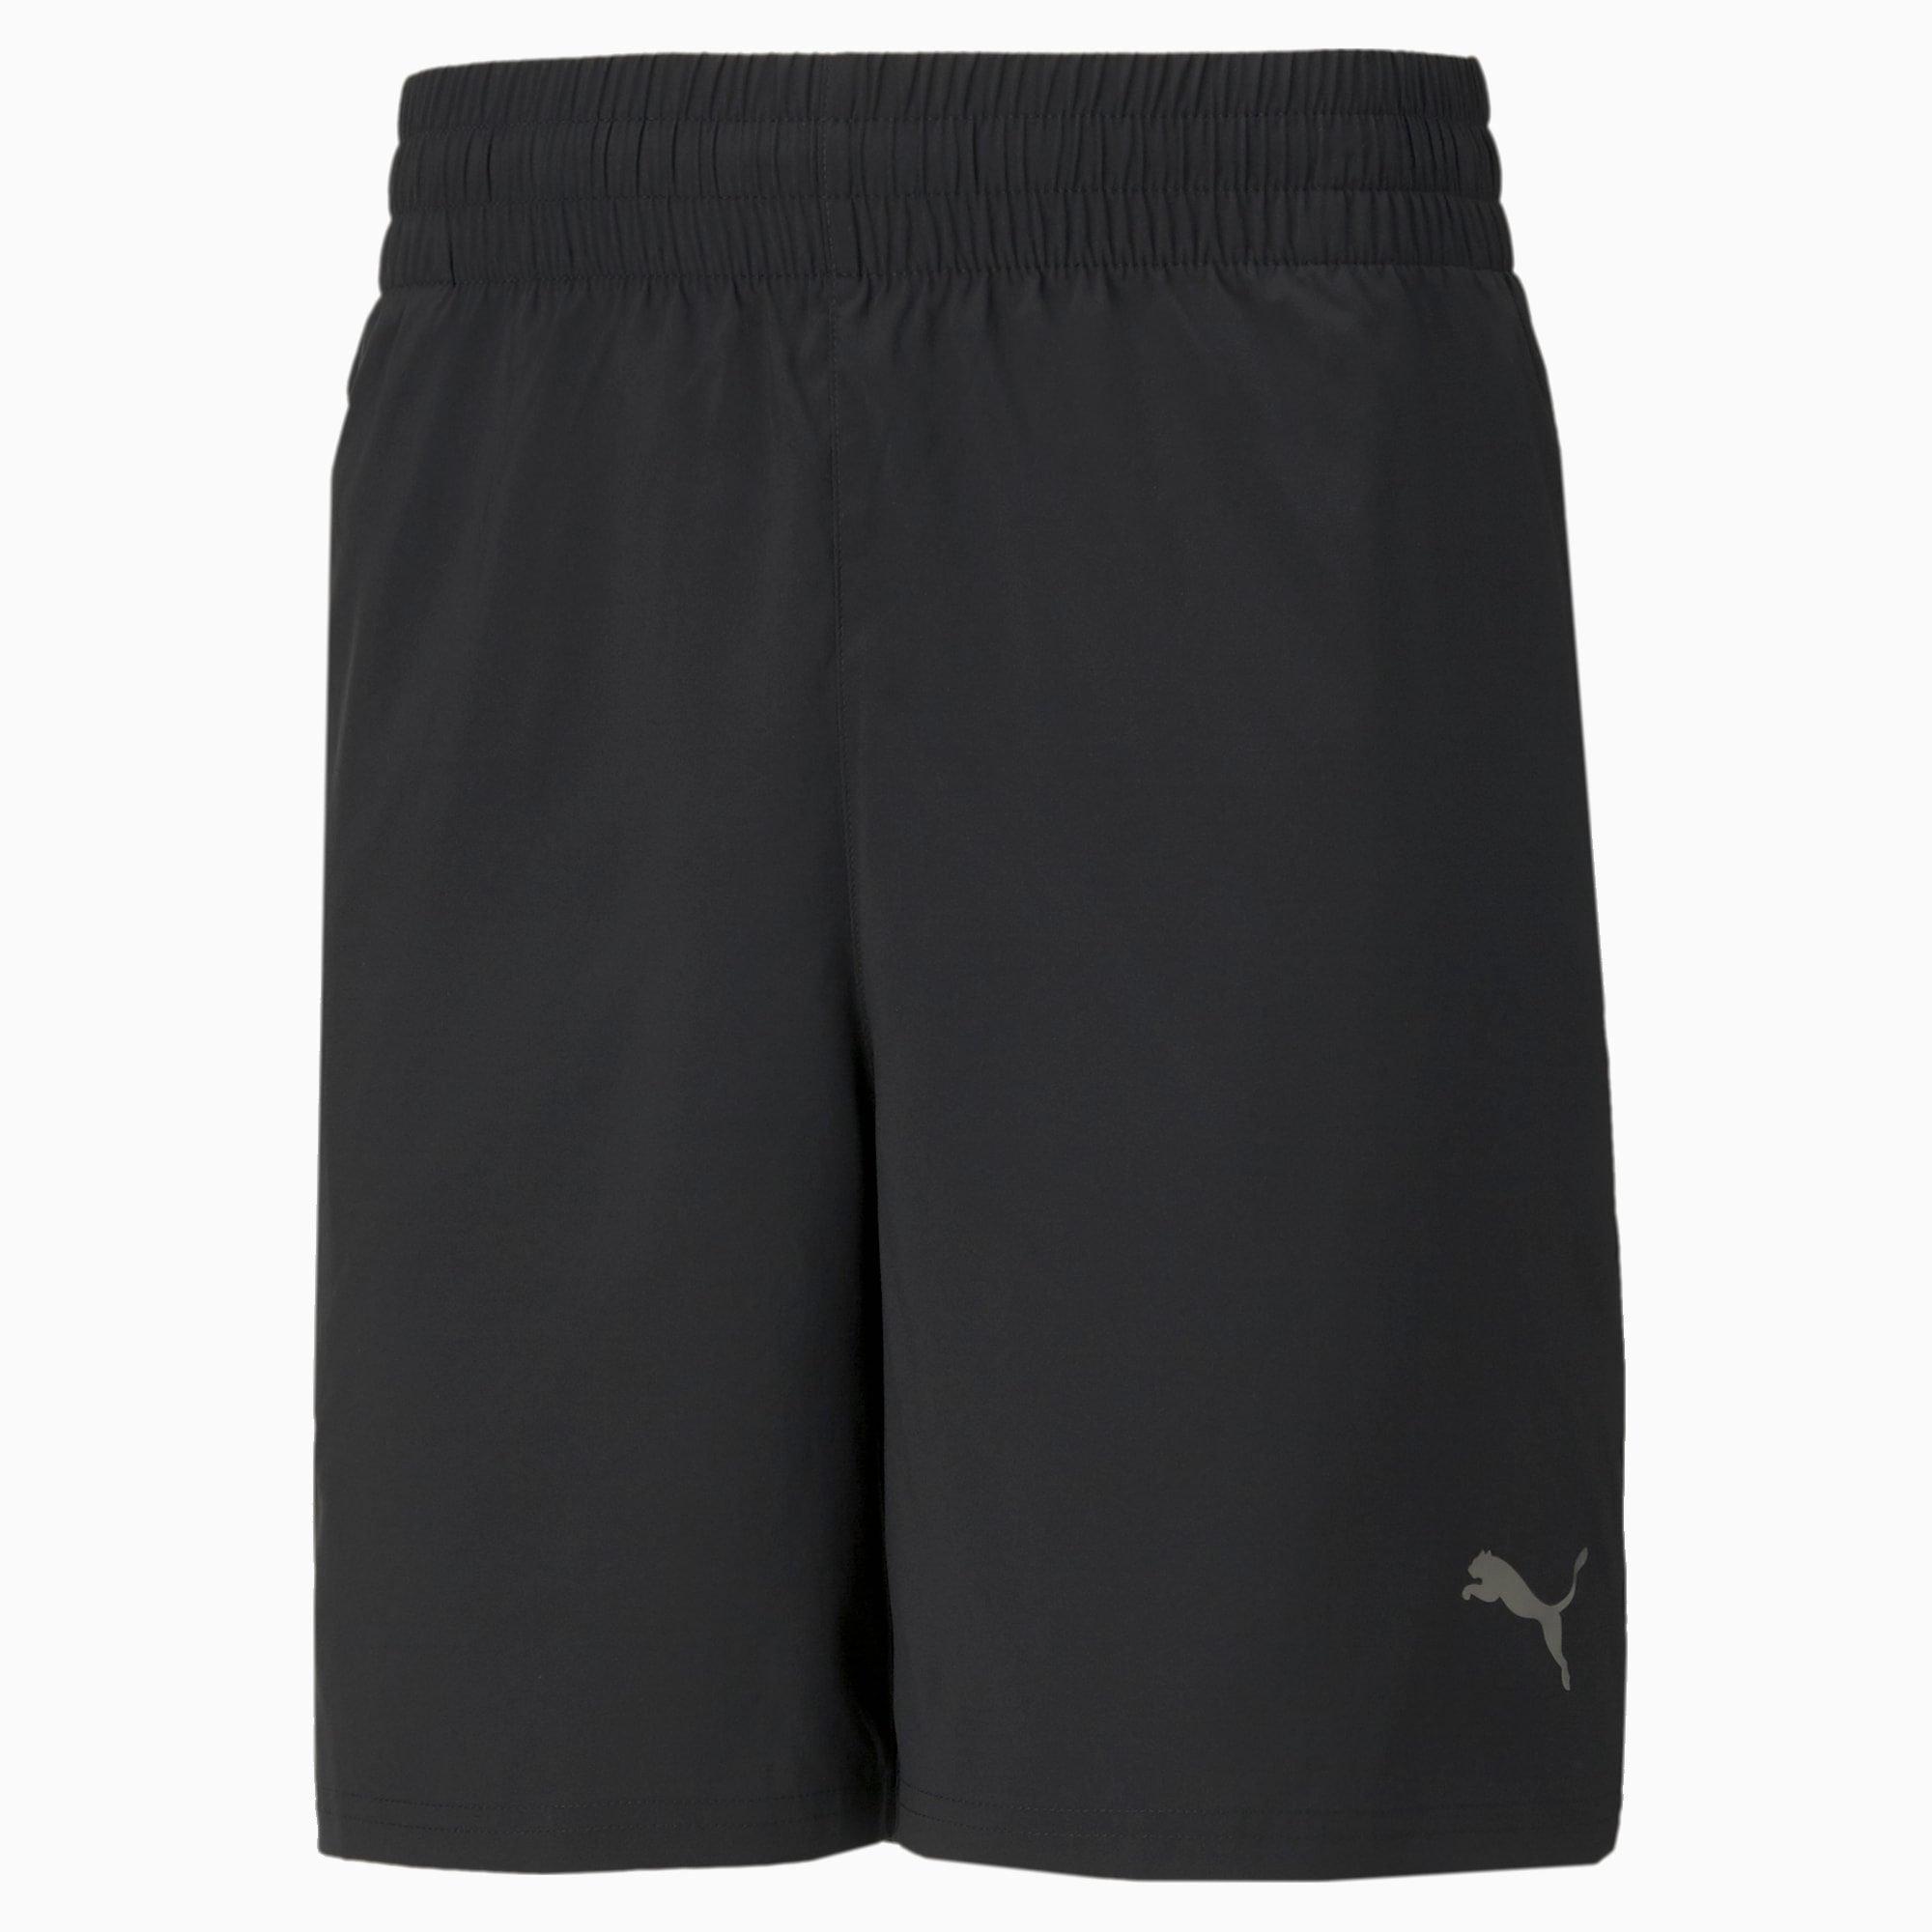 PUMA Favourite Blaster 7 Men's Training Shorts, Black